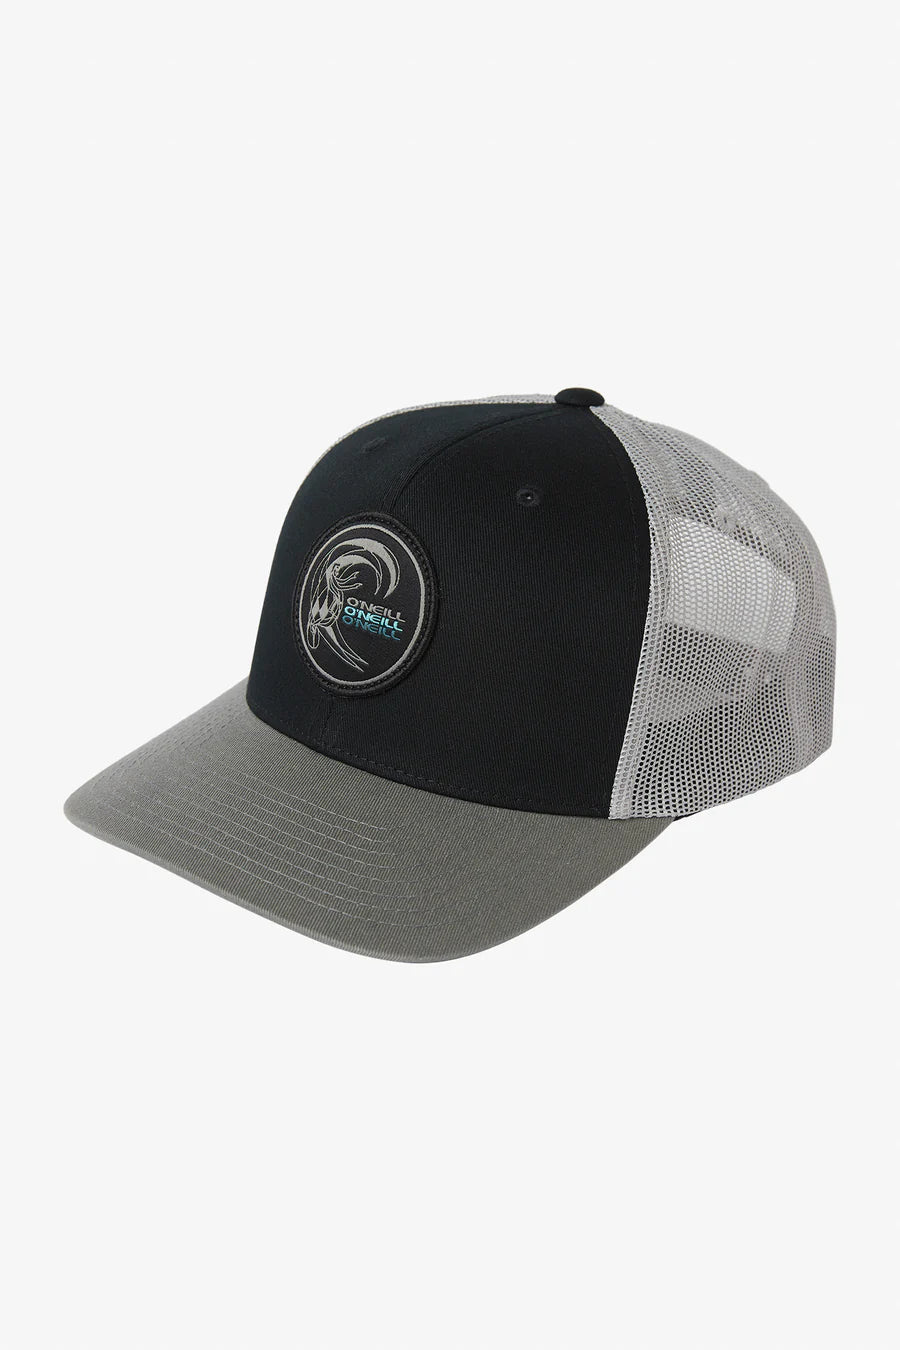 CS Trucker Hat - SoHa Surf Shop